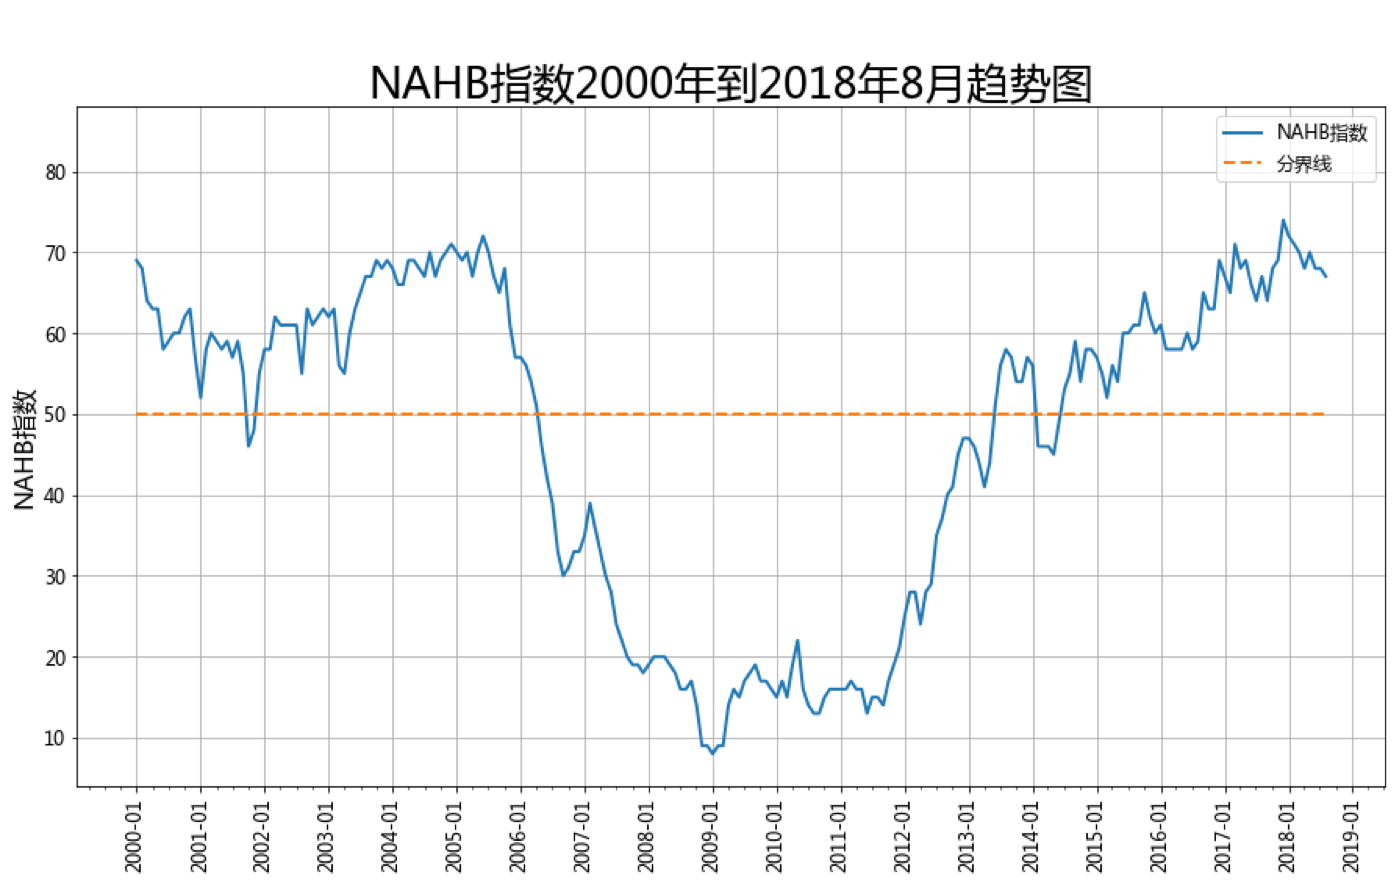 NAHB指数2000年到2018年8月趋势图